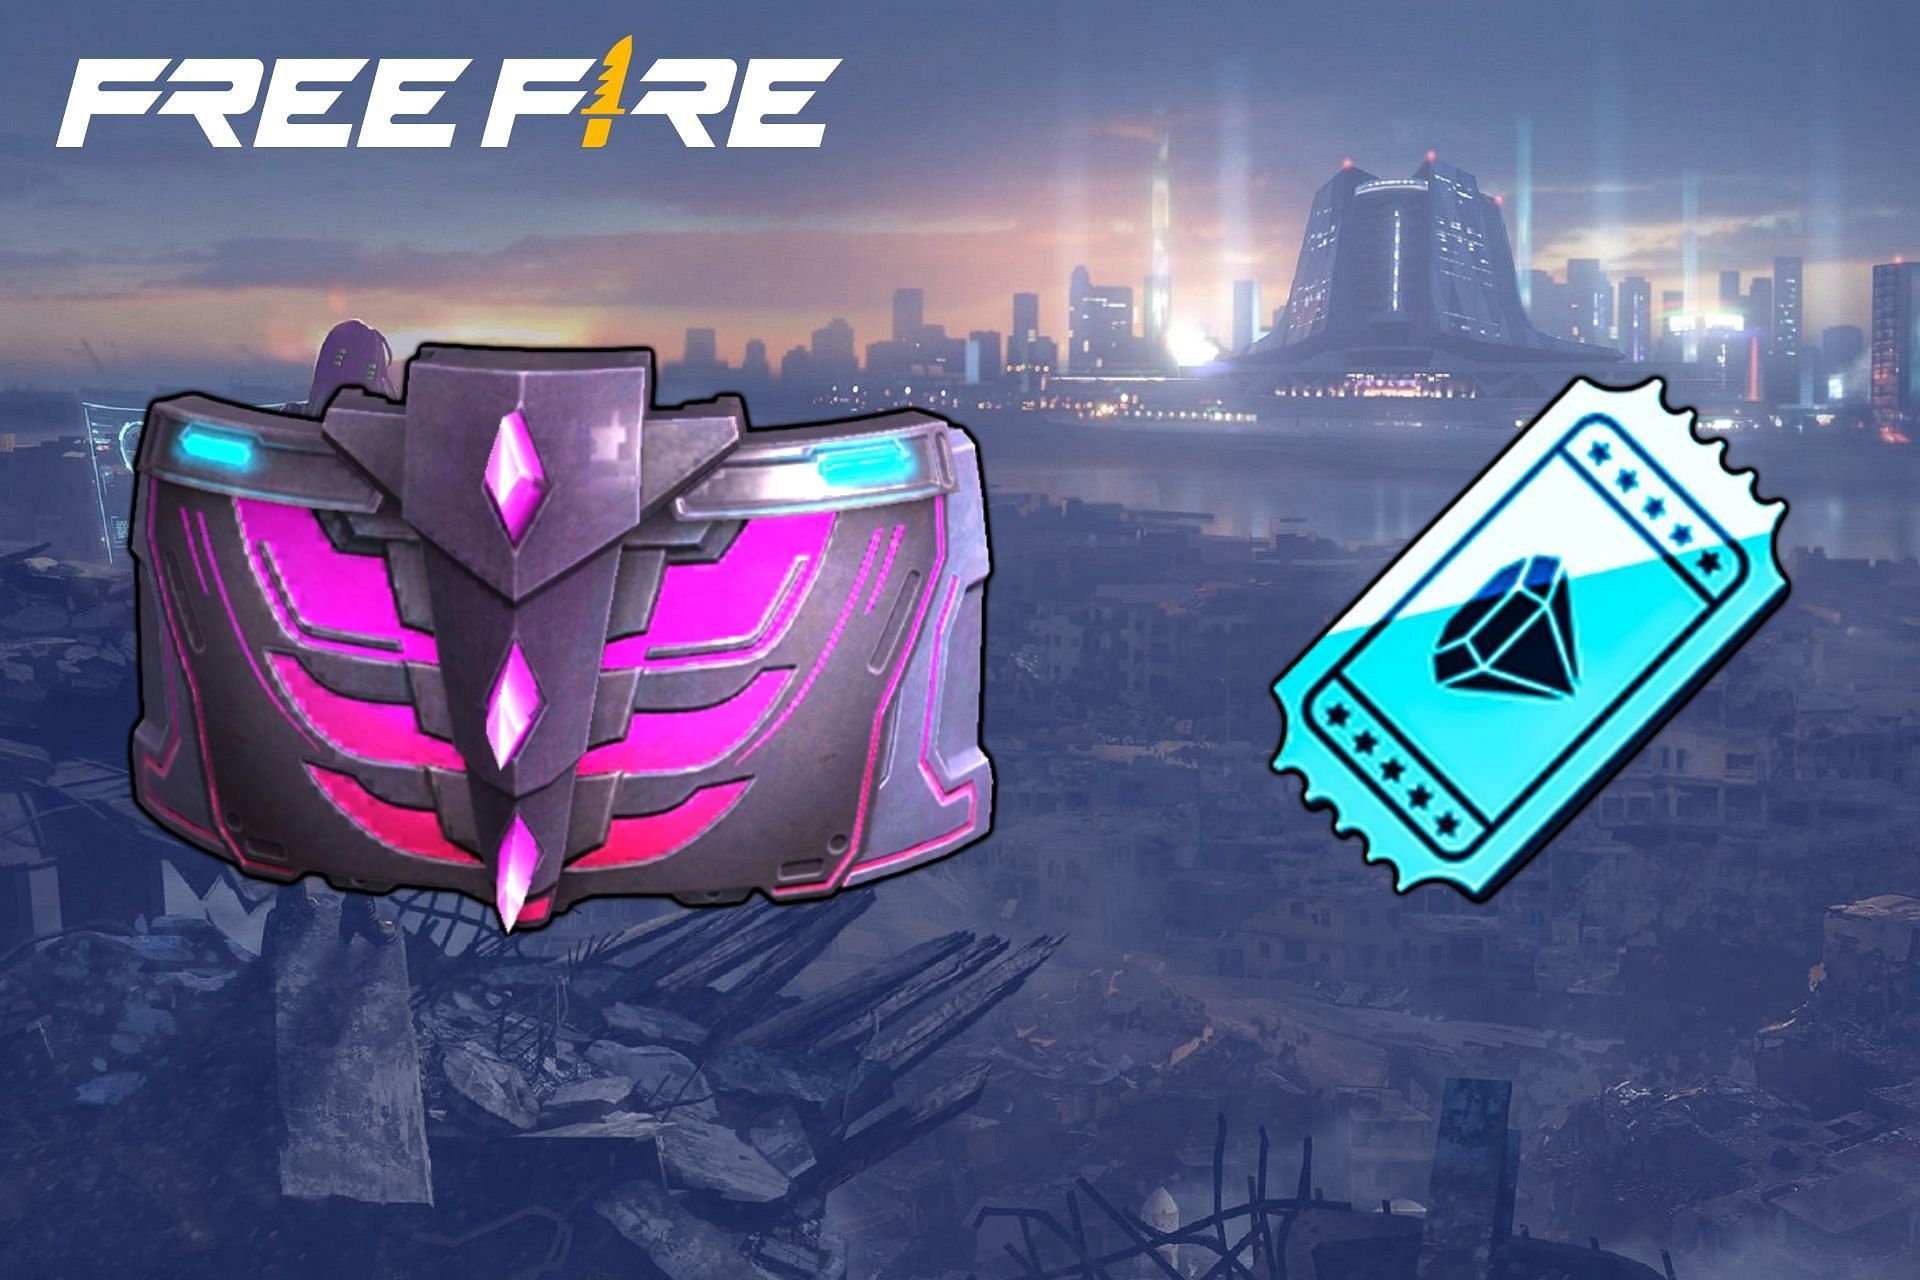 Free Fire redeem codes to earn free rewards in the game (Image via Sportskeeda)